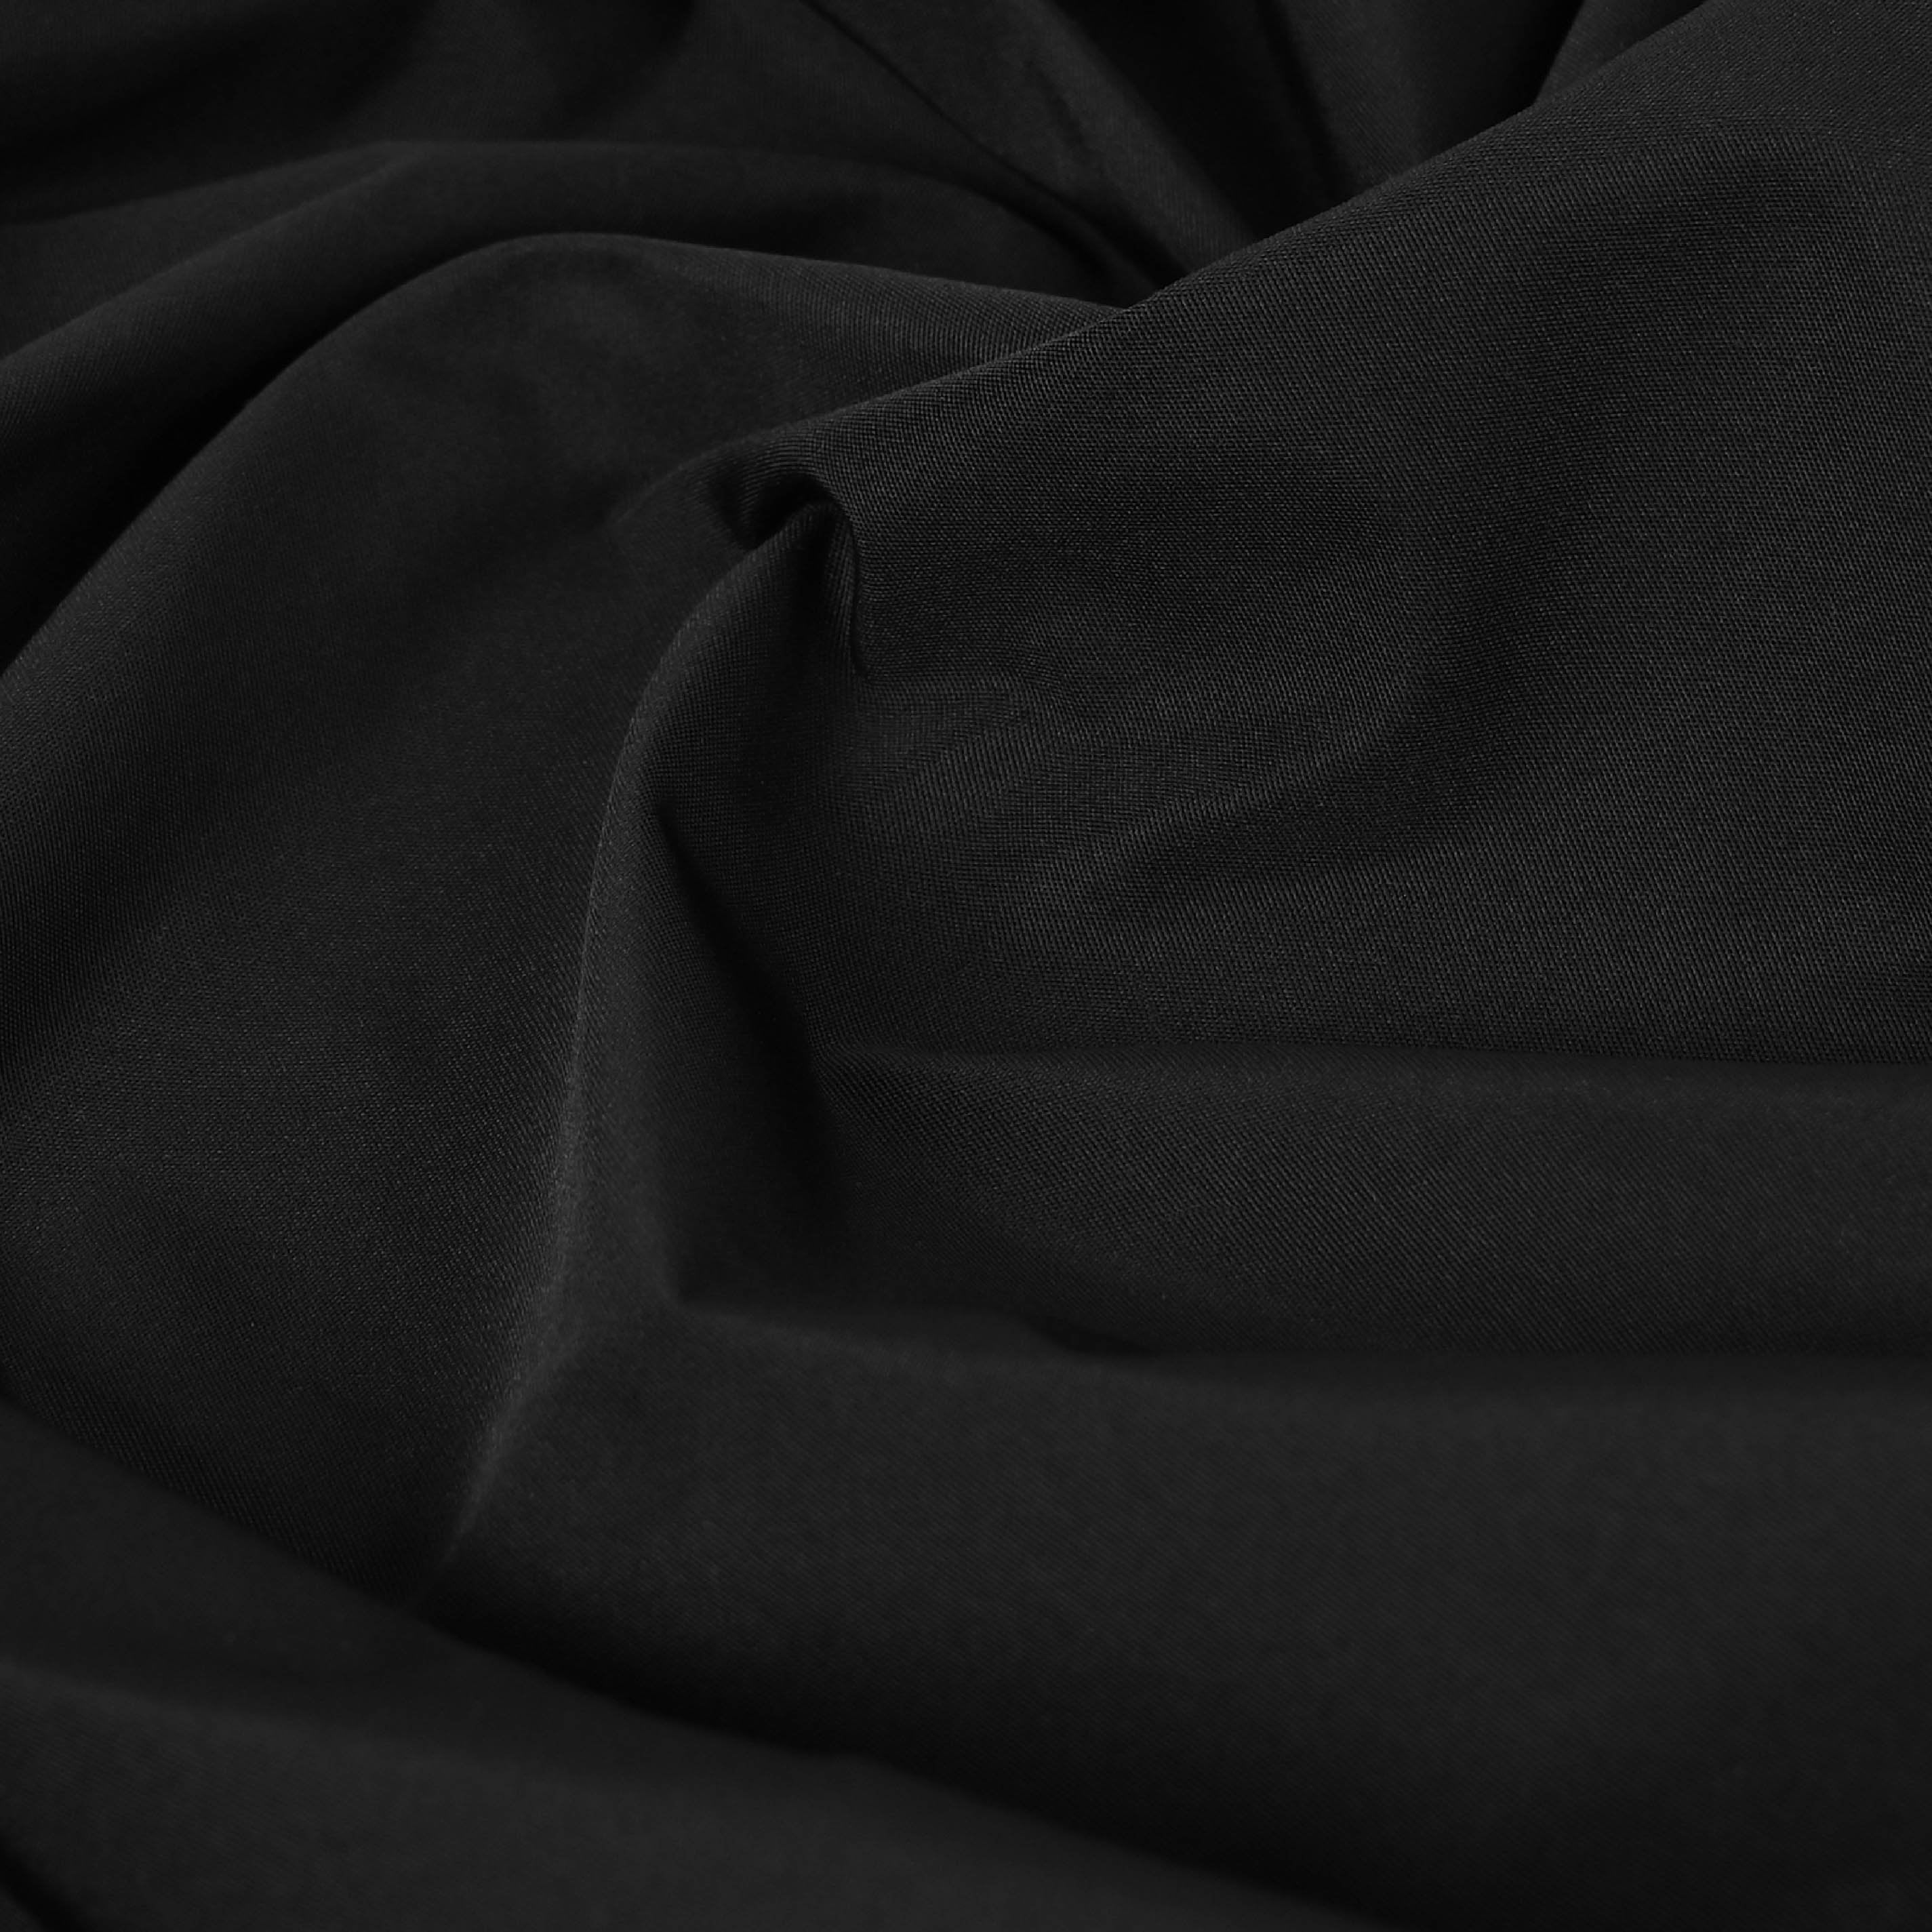 Black Grosgrain Fabric 2802